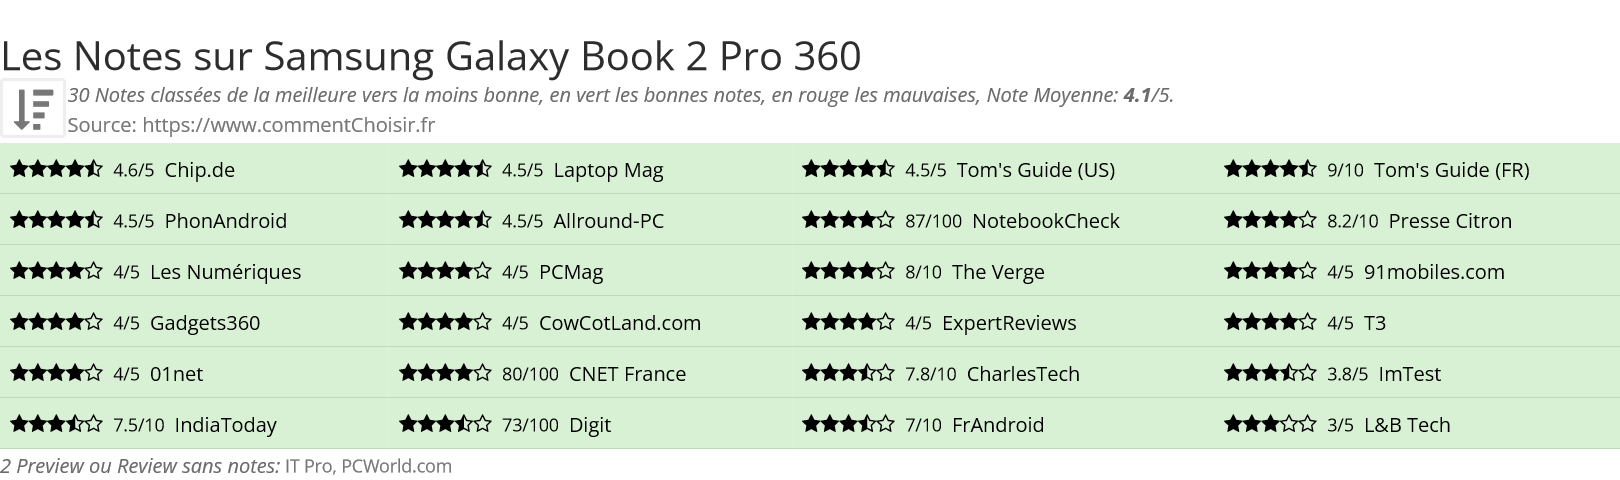 Ratings Samsung Galaxy Book 2 Pro 360